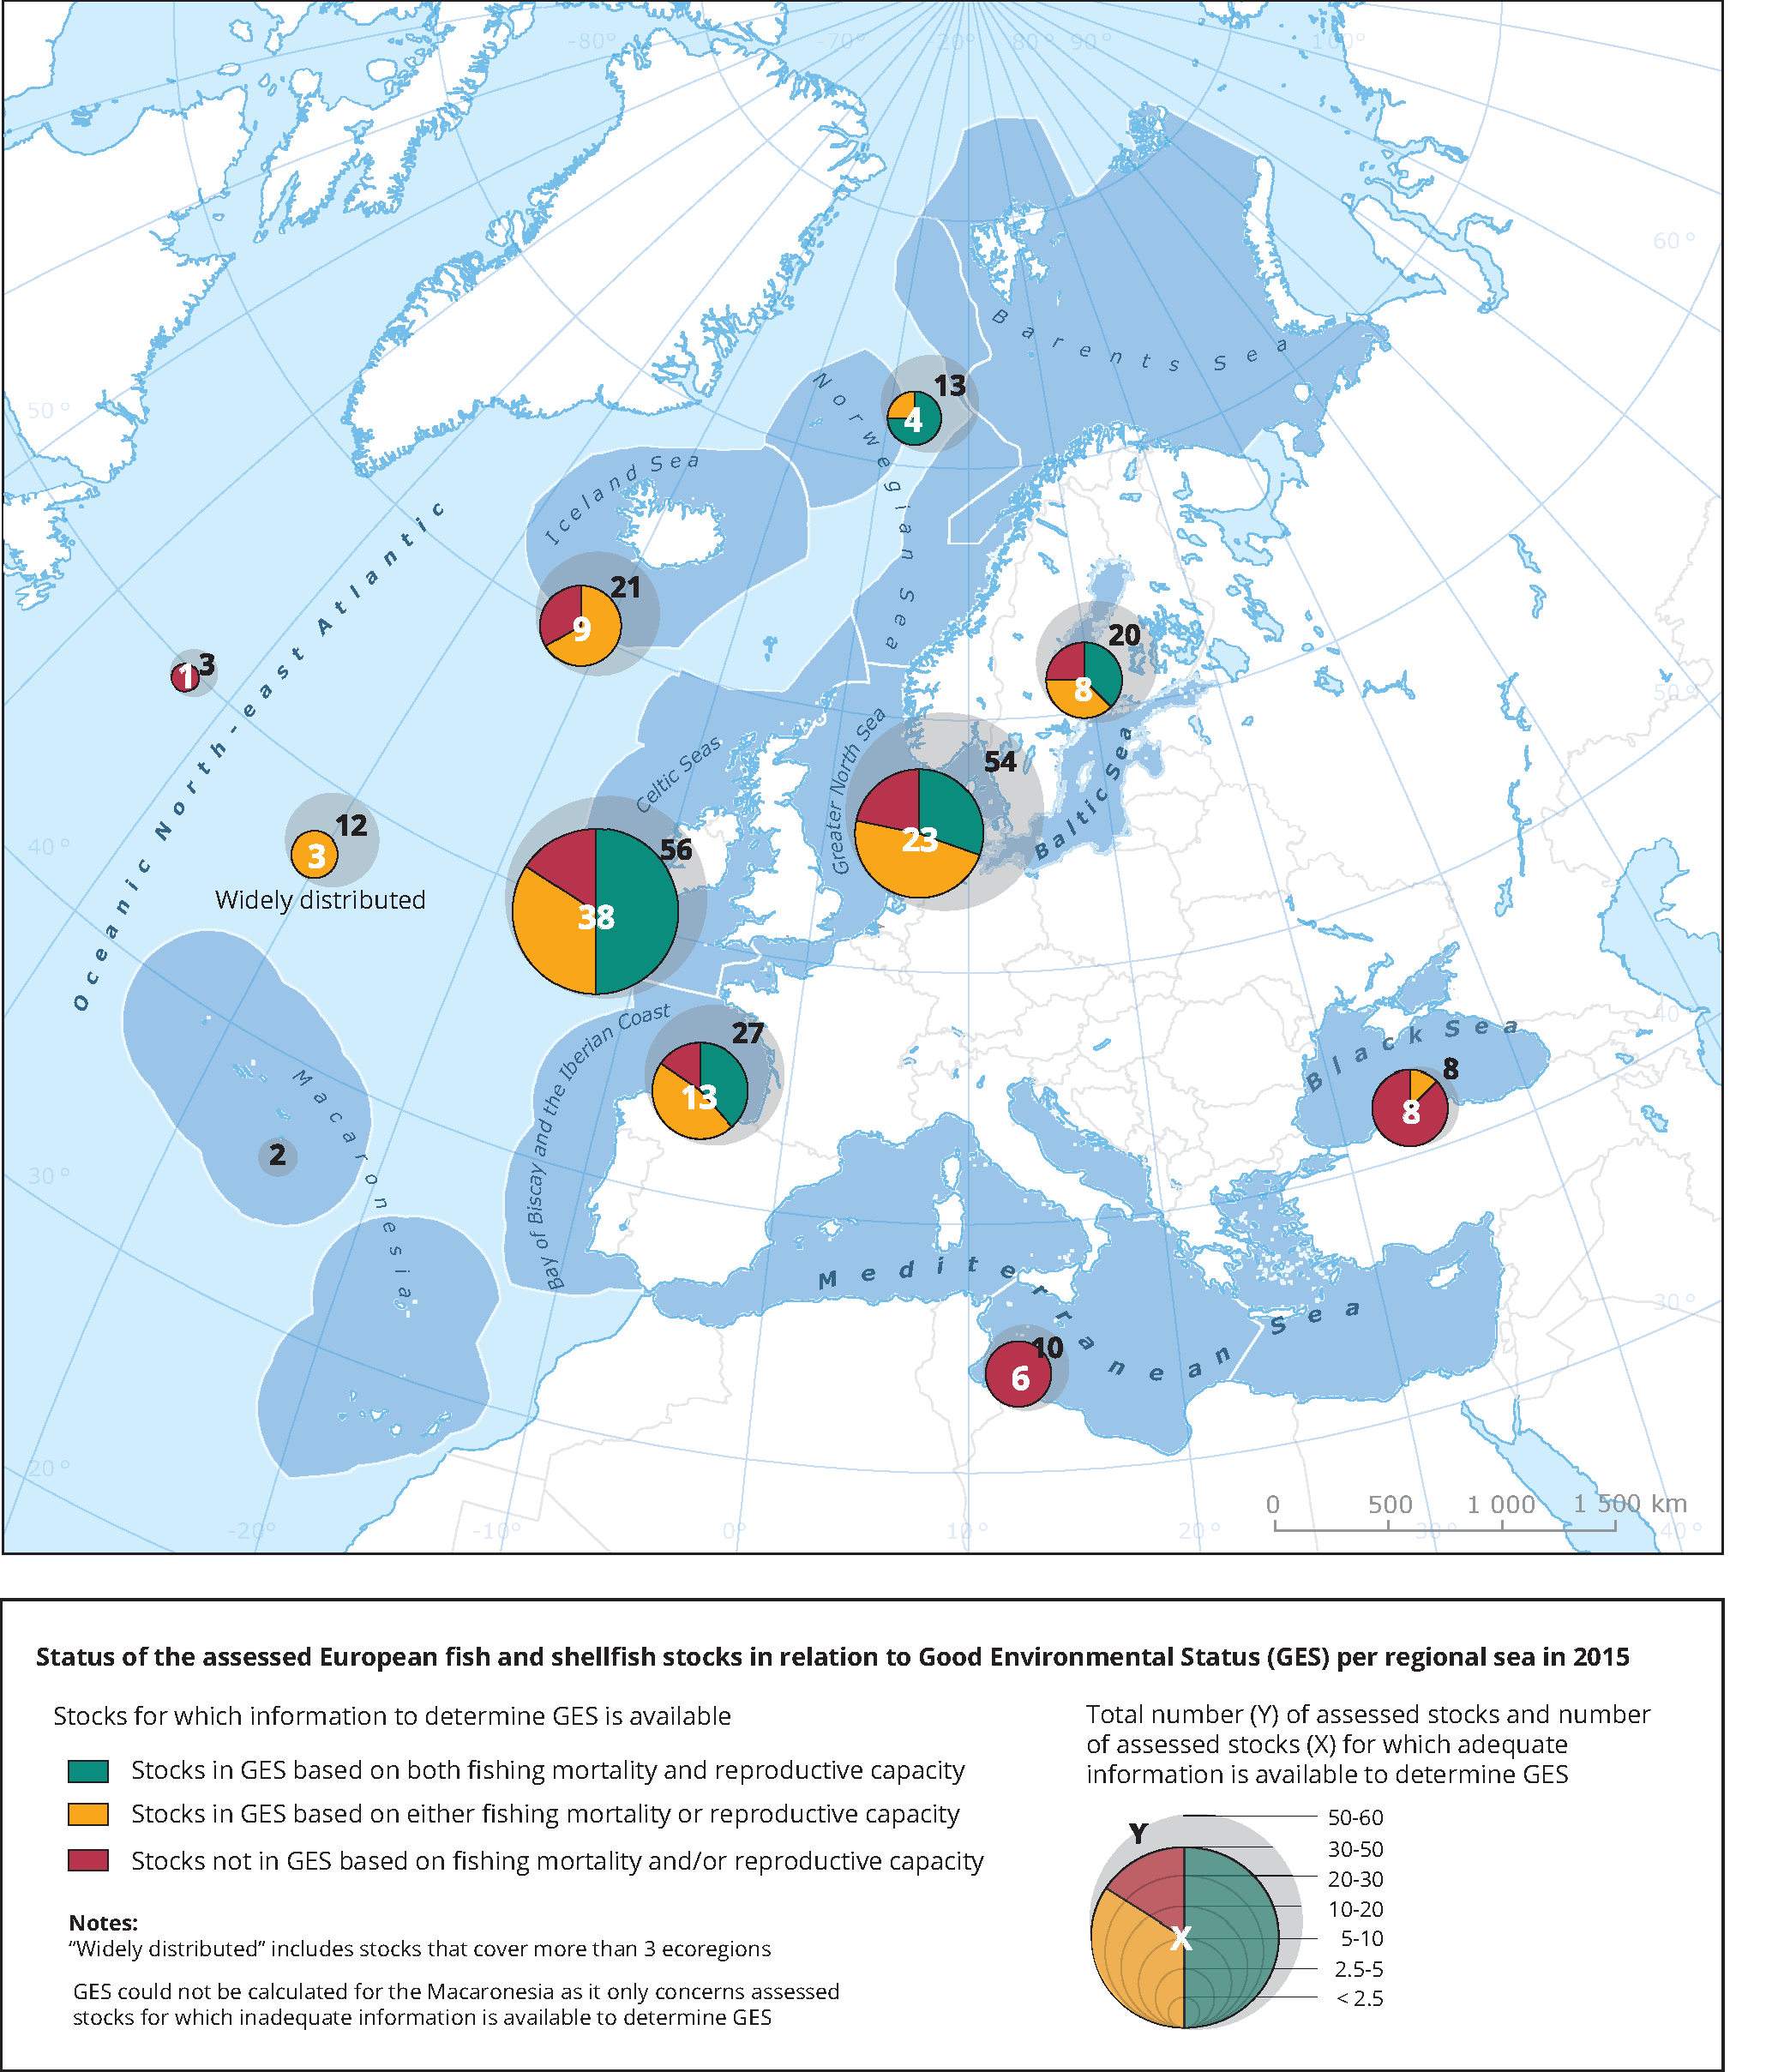 Status of the assessed European fish stocks in relation to Good Environmental Status per regional sea